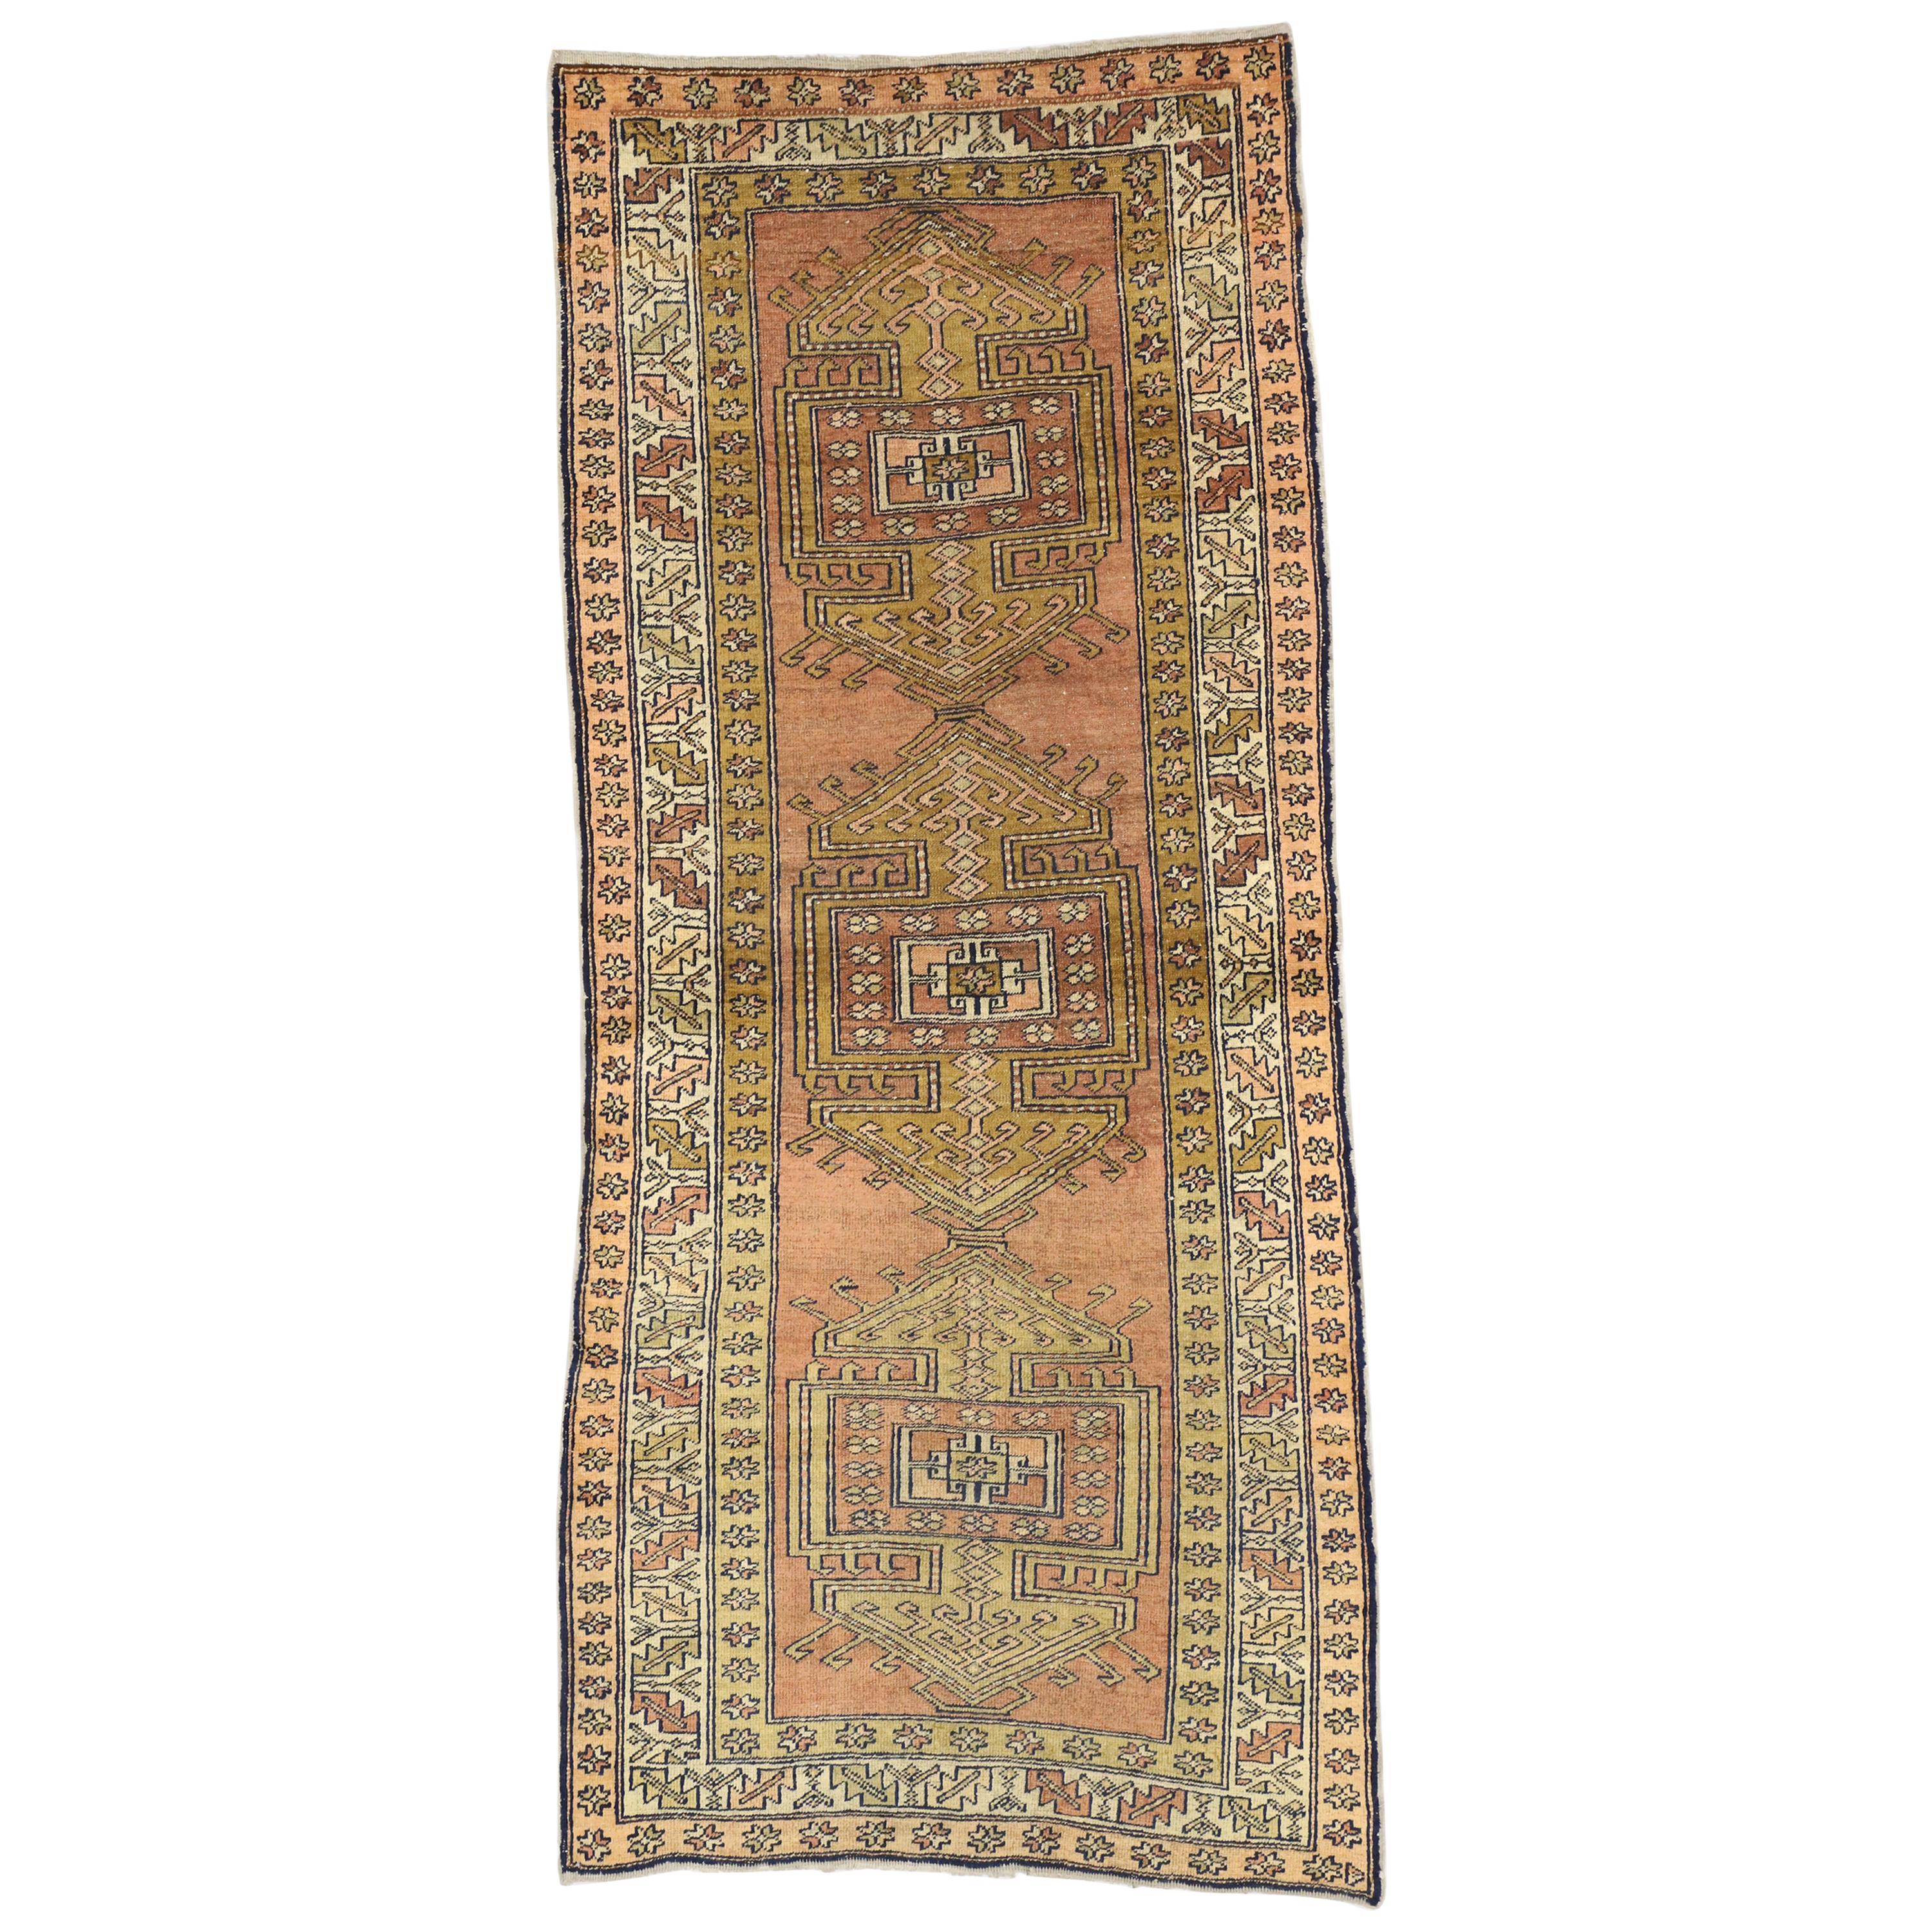 Antique Caucasian Kazak Rug with Tribal Style, Wide Hallway Runner